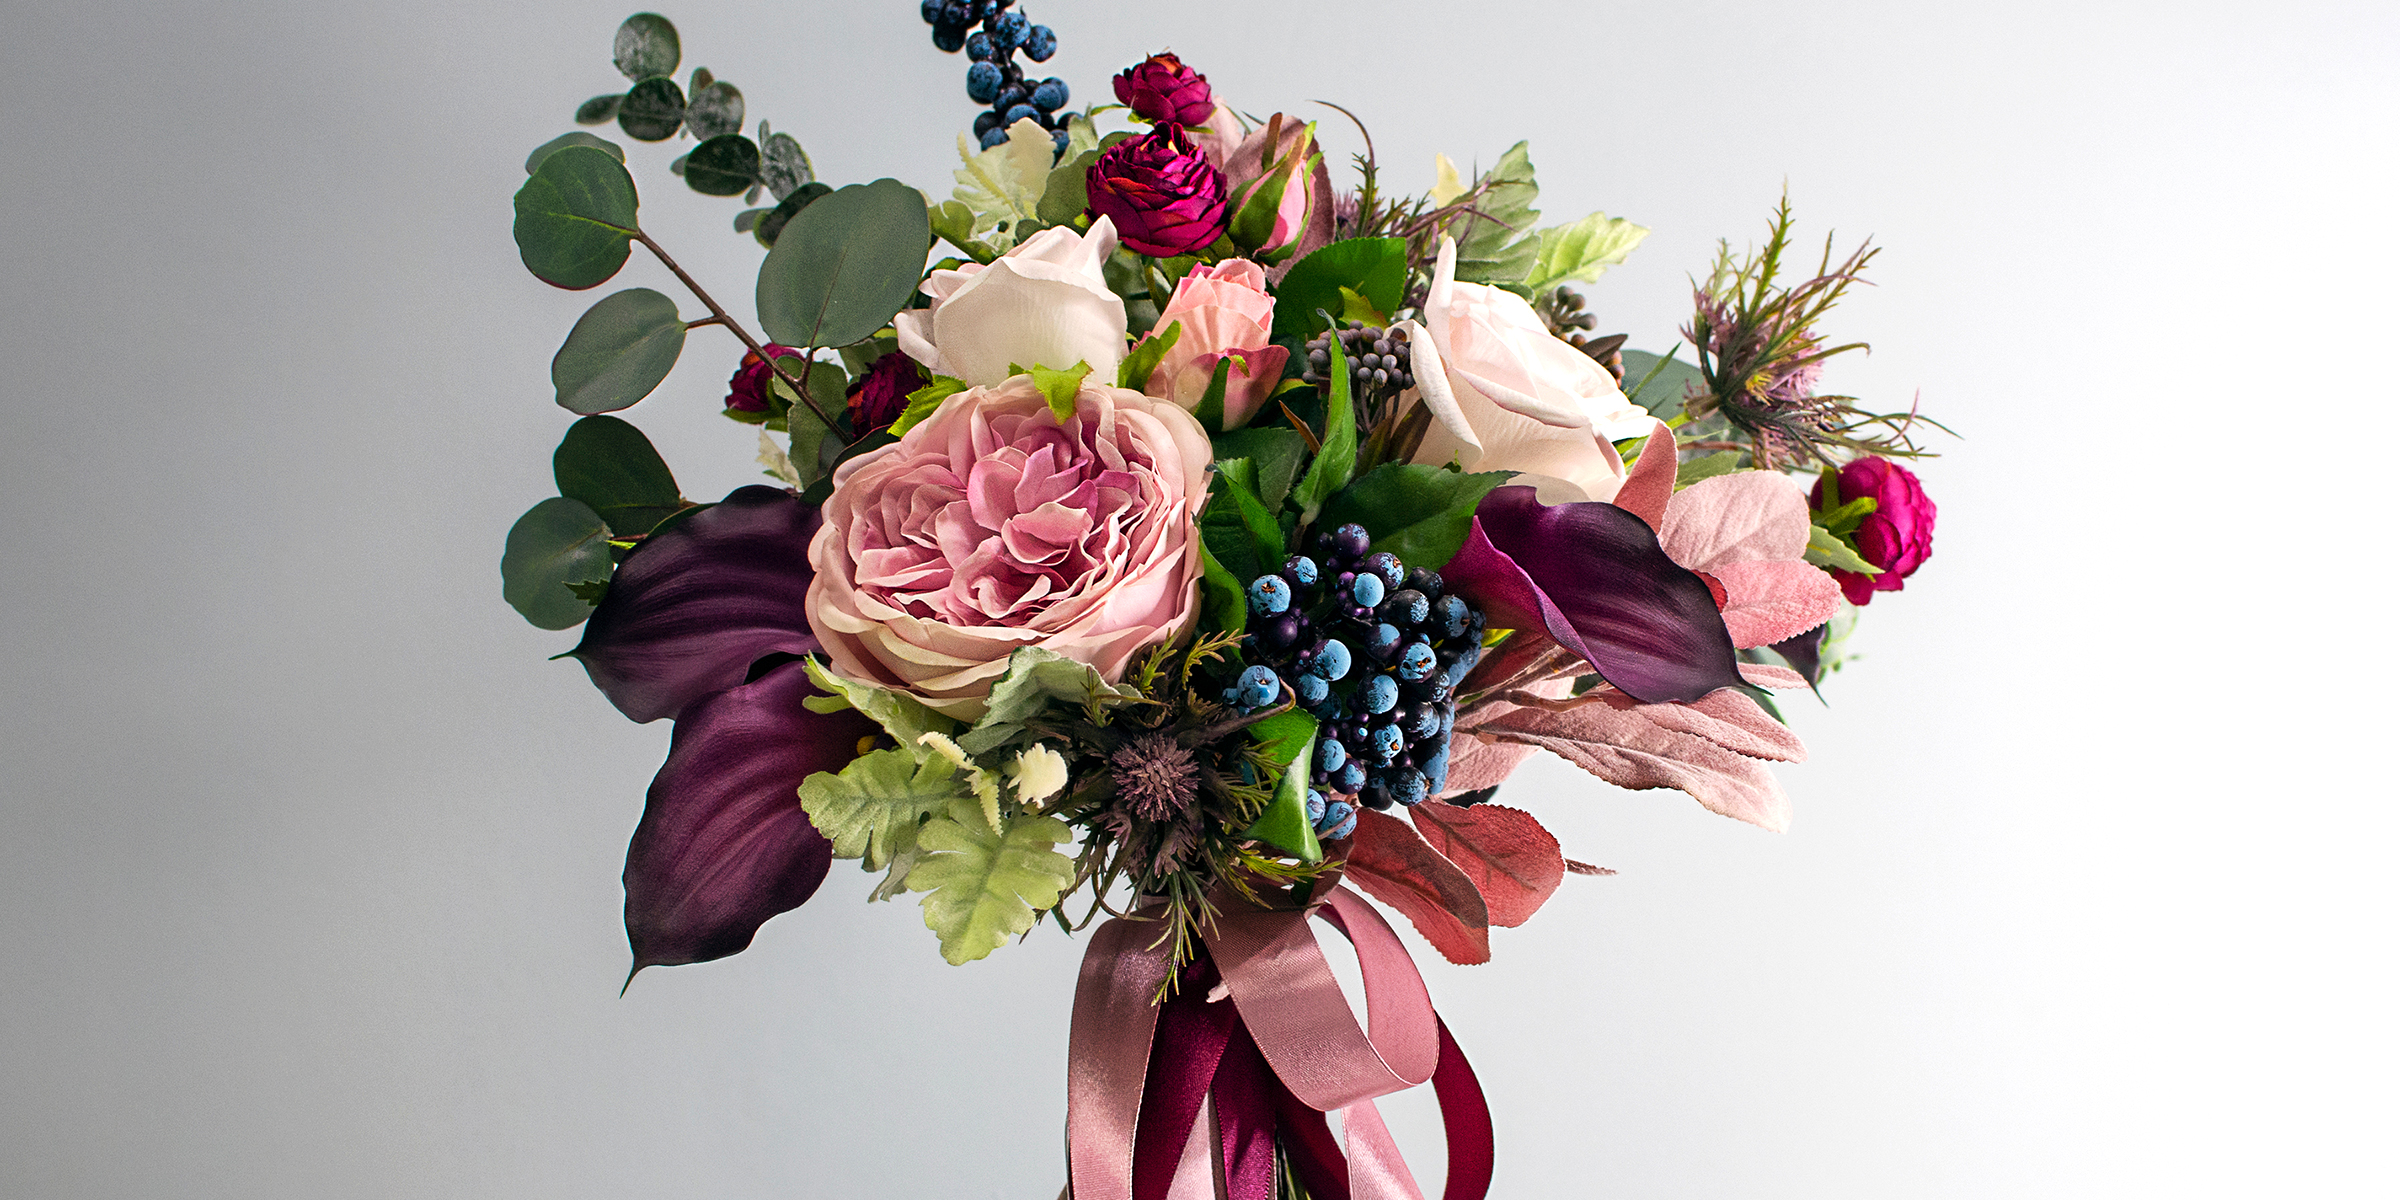 A vibrant bouquet of flowers | Source: Shutterstock